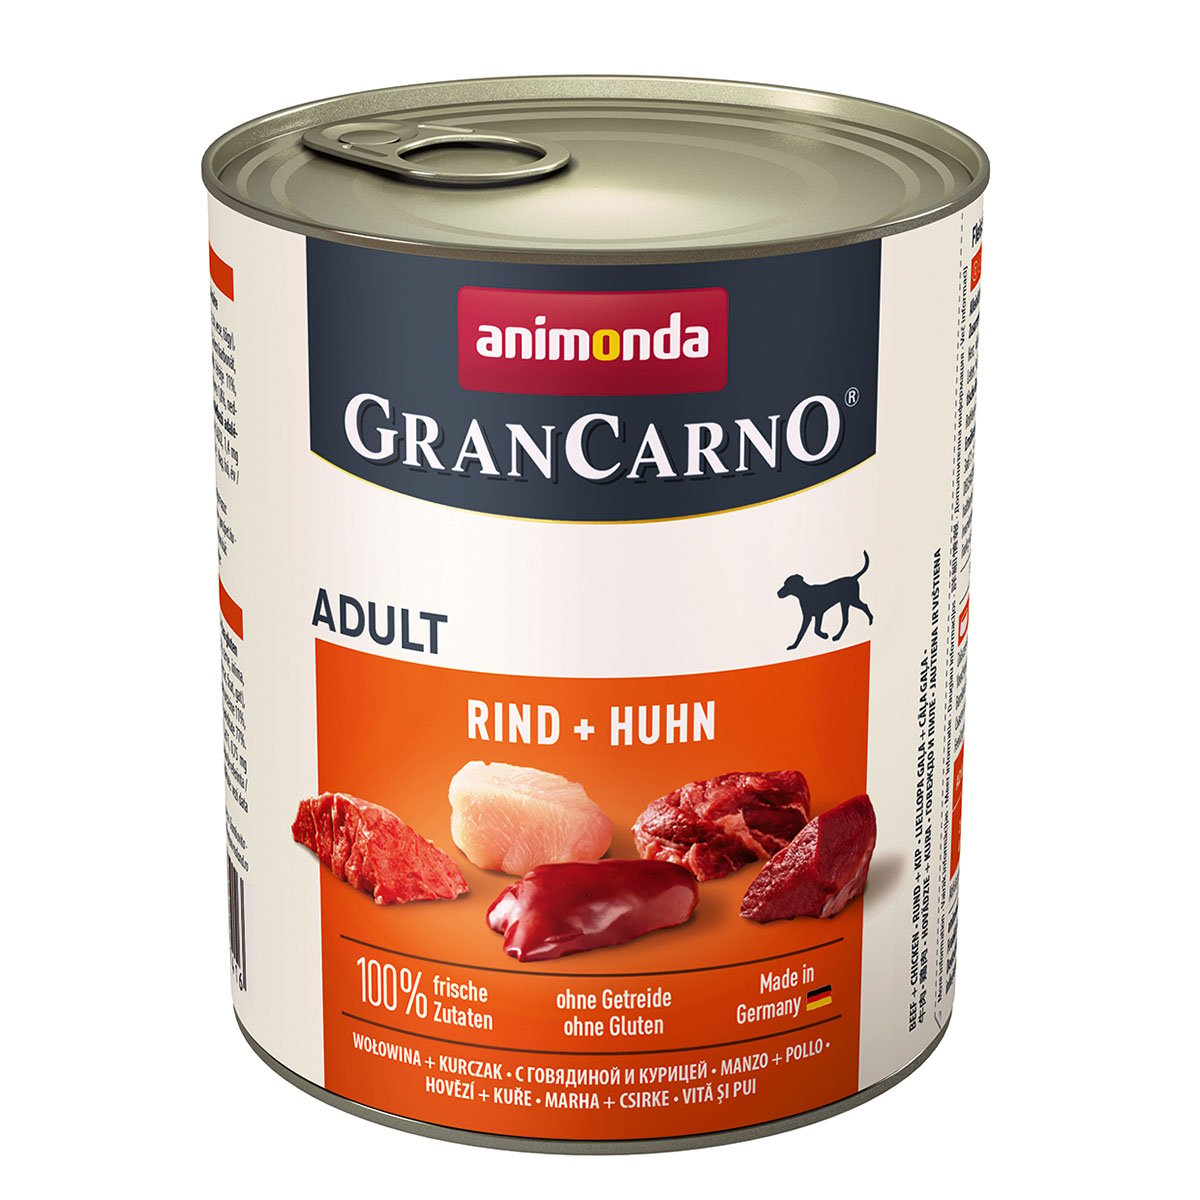 animonda GranCarno Adult mit Rind und Huhn 6x800g von animonda GranCarno